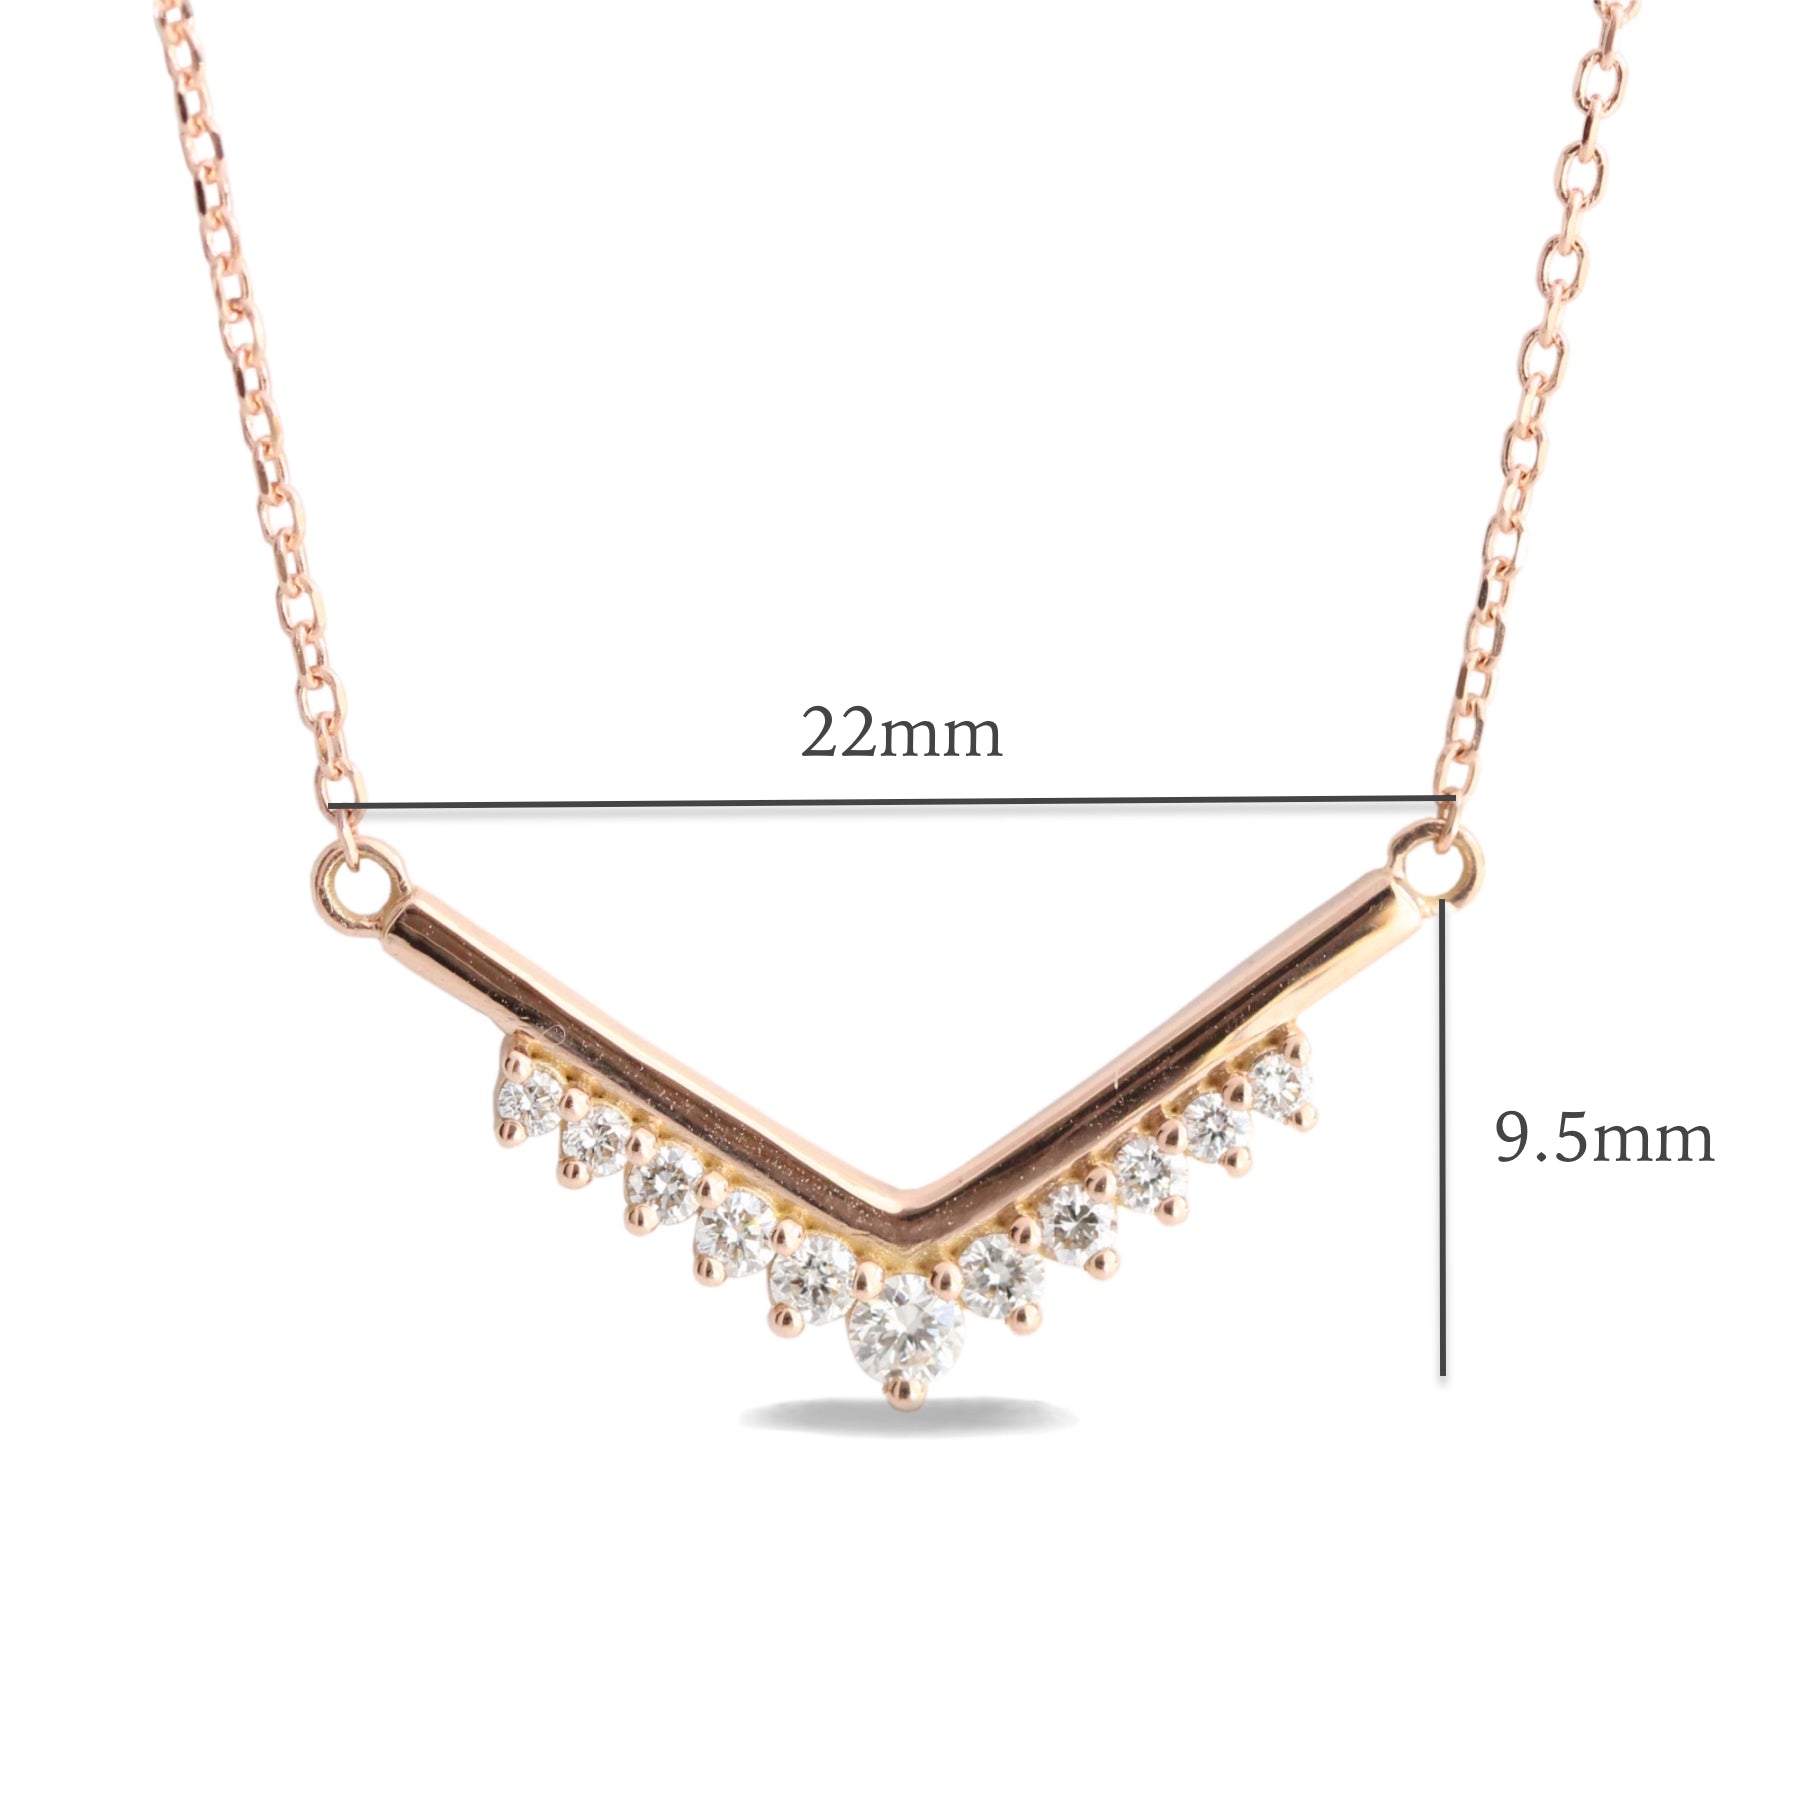 Tiara diamond necklace rose gold V shaped pendant la more design jewelry